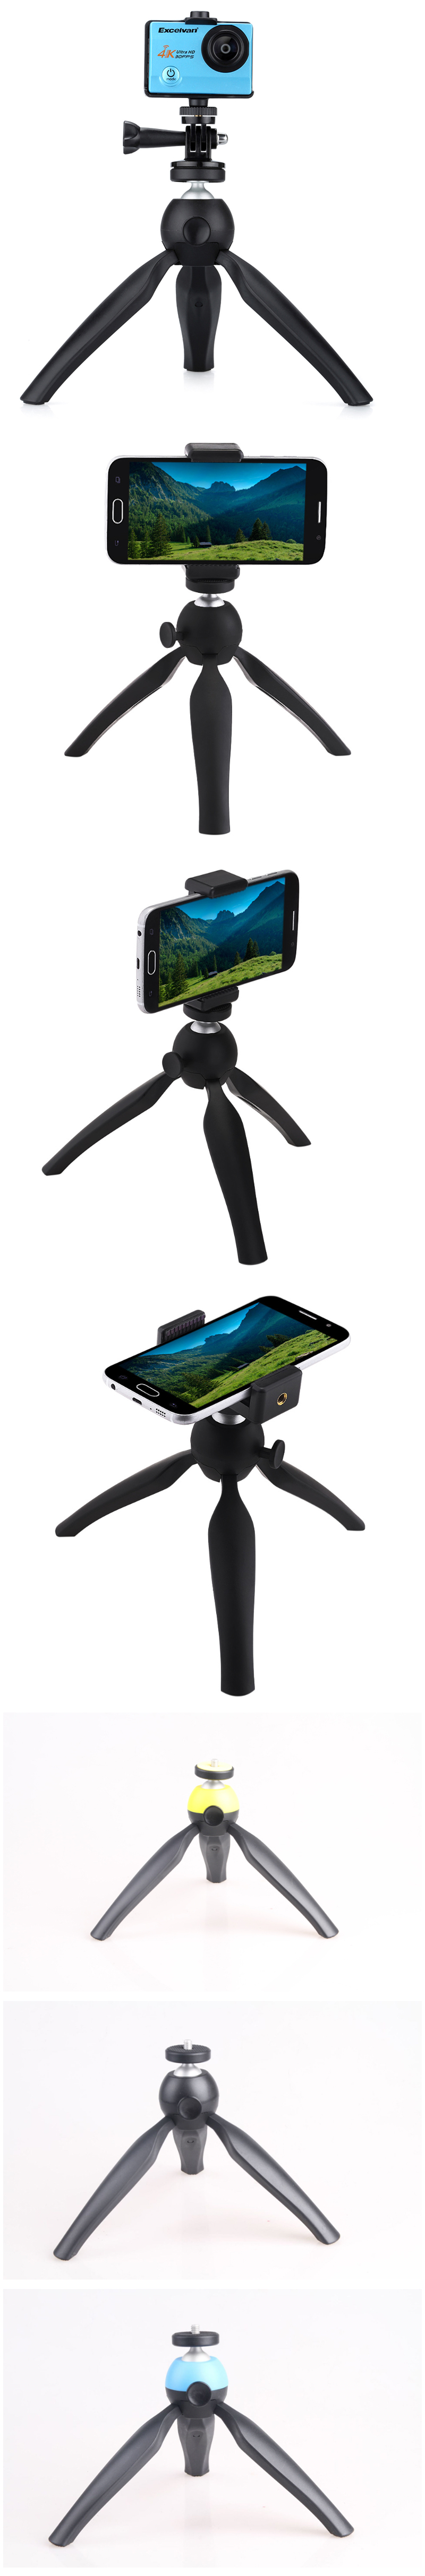 K3 Mini Tripod for Smartphone&Phone Holder Stand Mount for iPhone X 7 Canon Nikon Gopro Portable Selfie Camera Monopod Accessory Projector Tripod 9